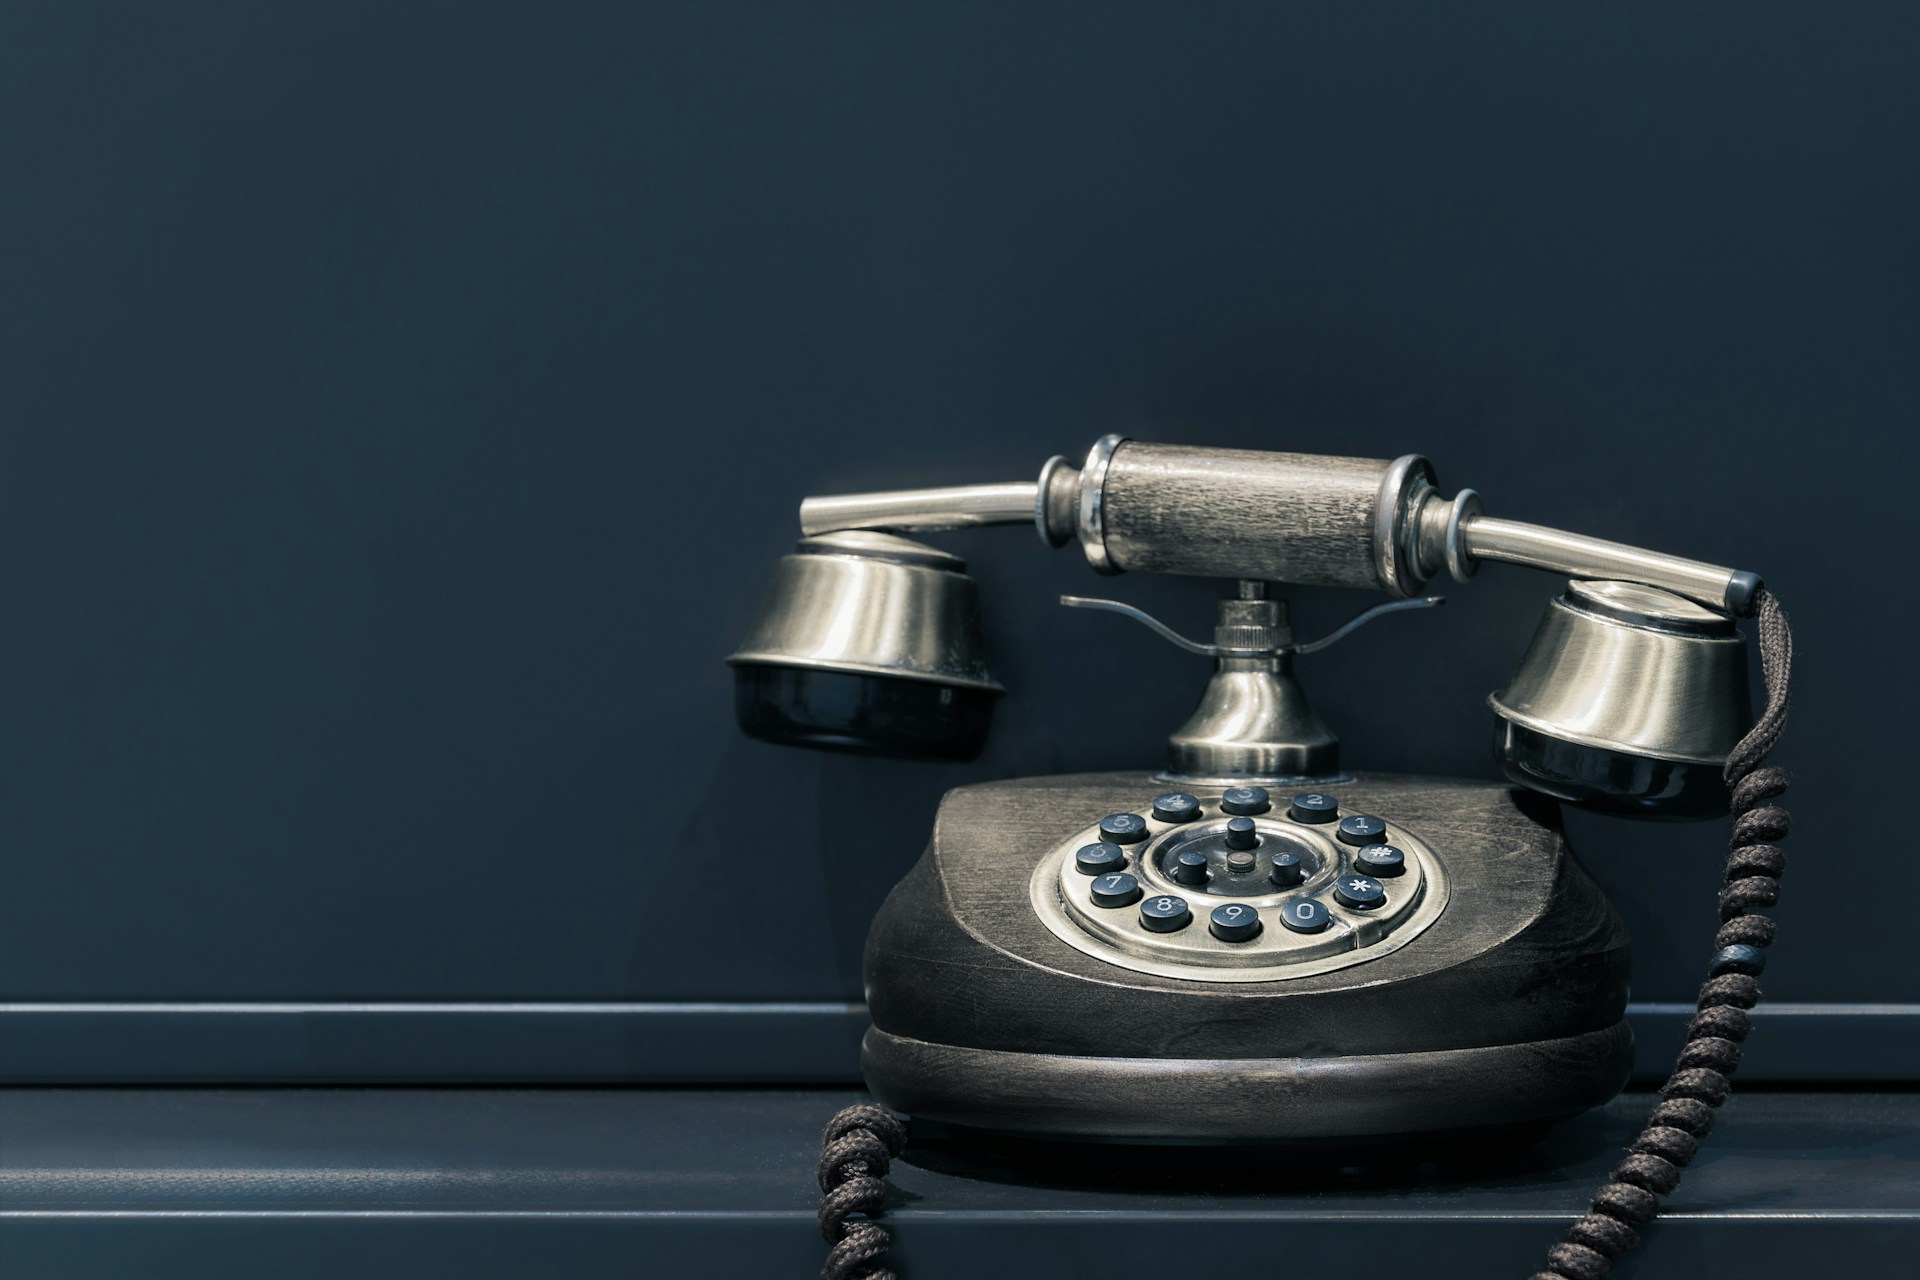 Photo of a vintage black rotary-style landline phone taken by Pawel Czerwinski